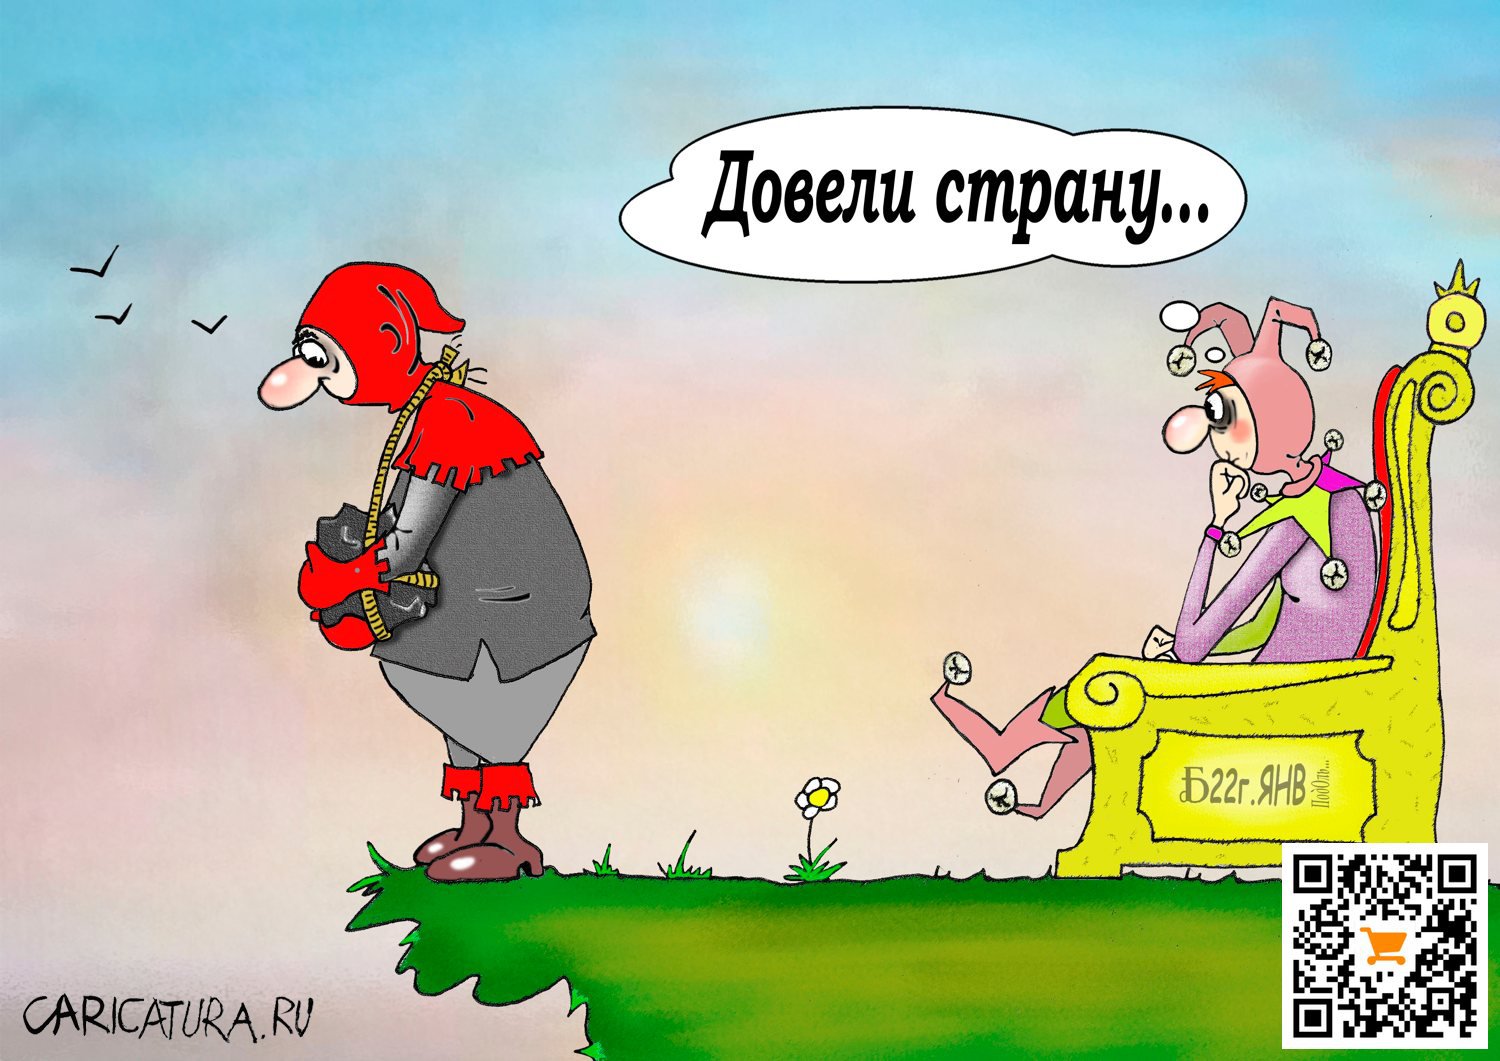 Карикатура "Про жизнь в жизни", Борис Демин